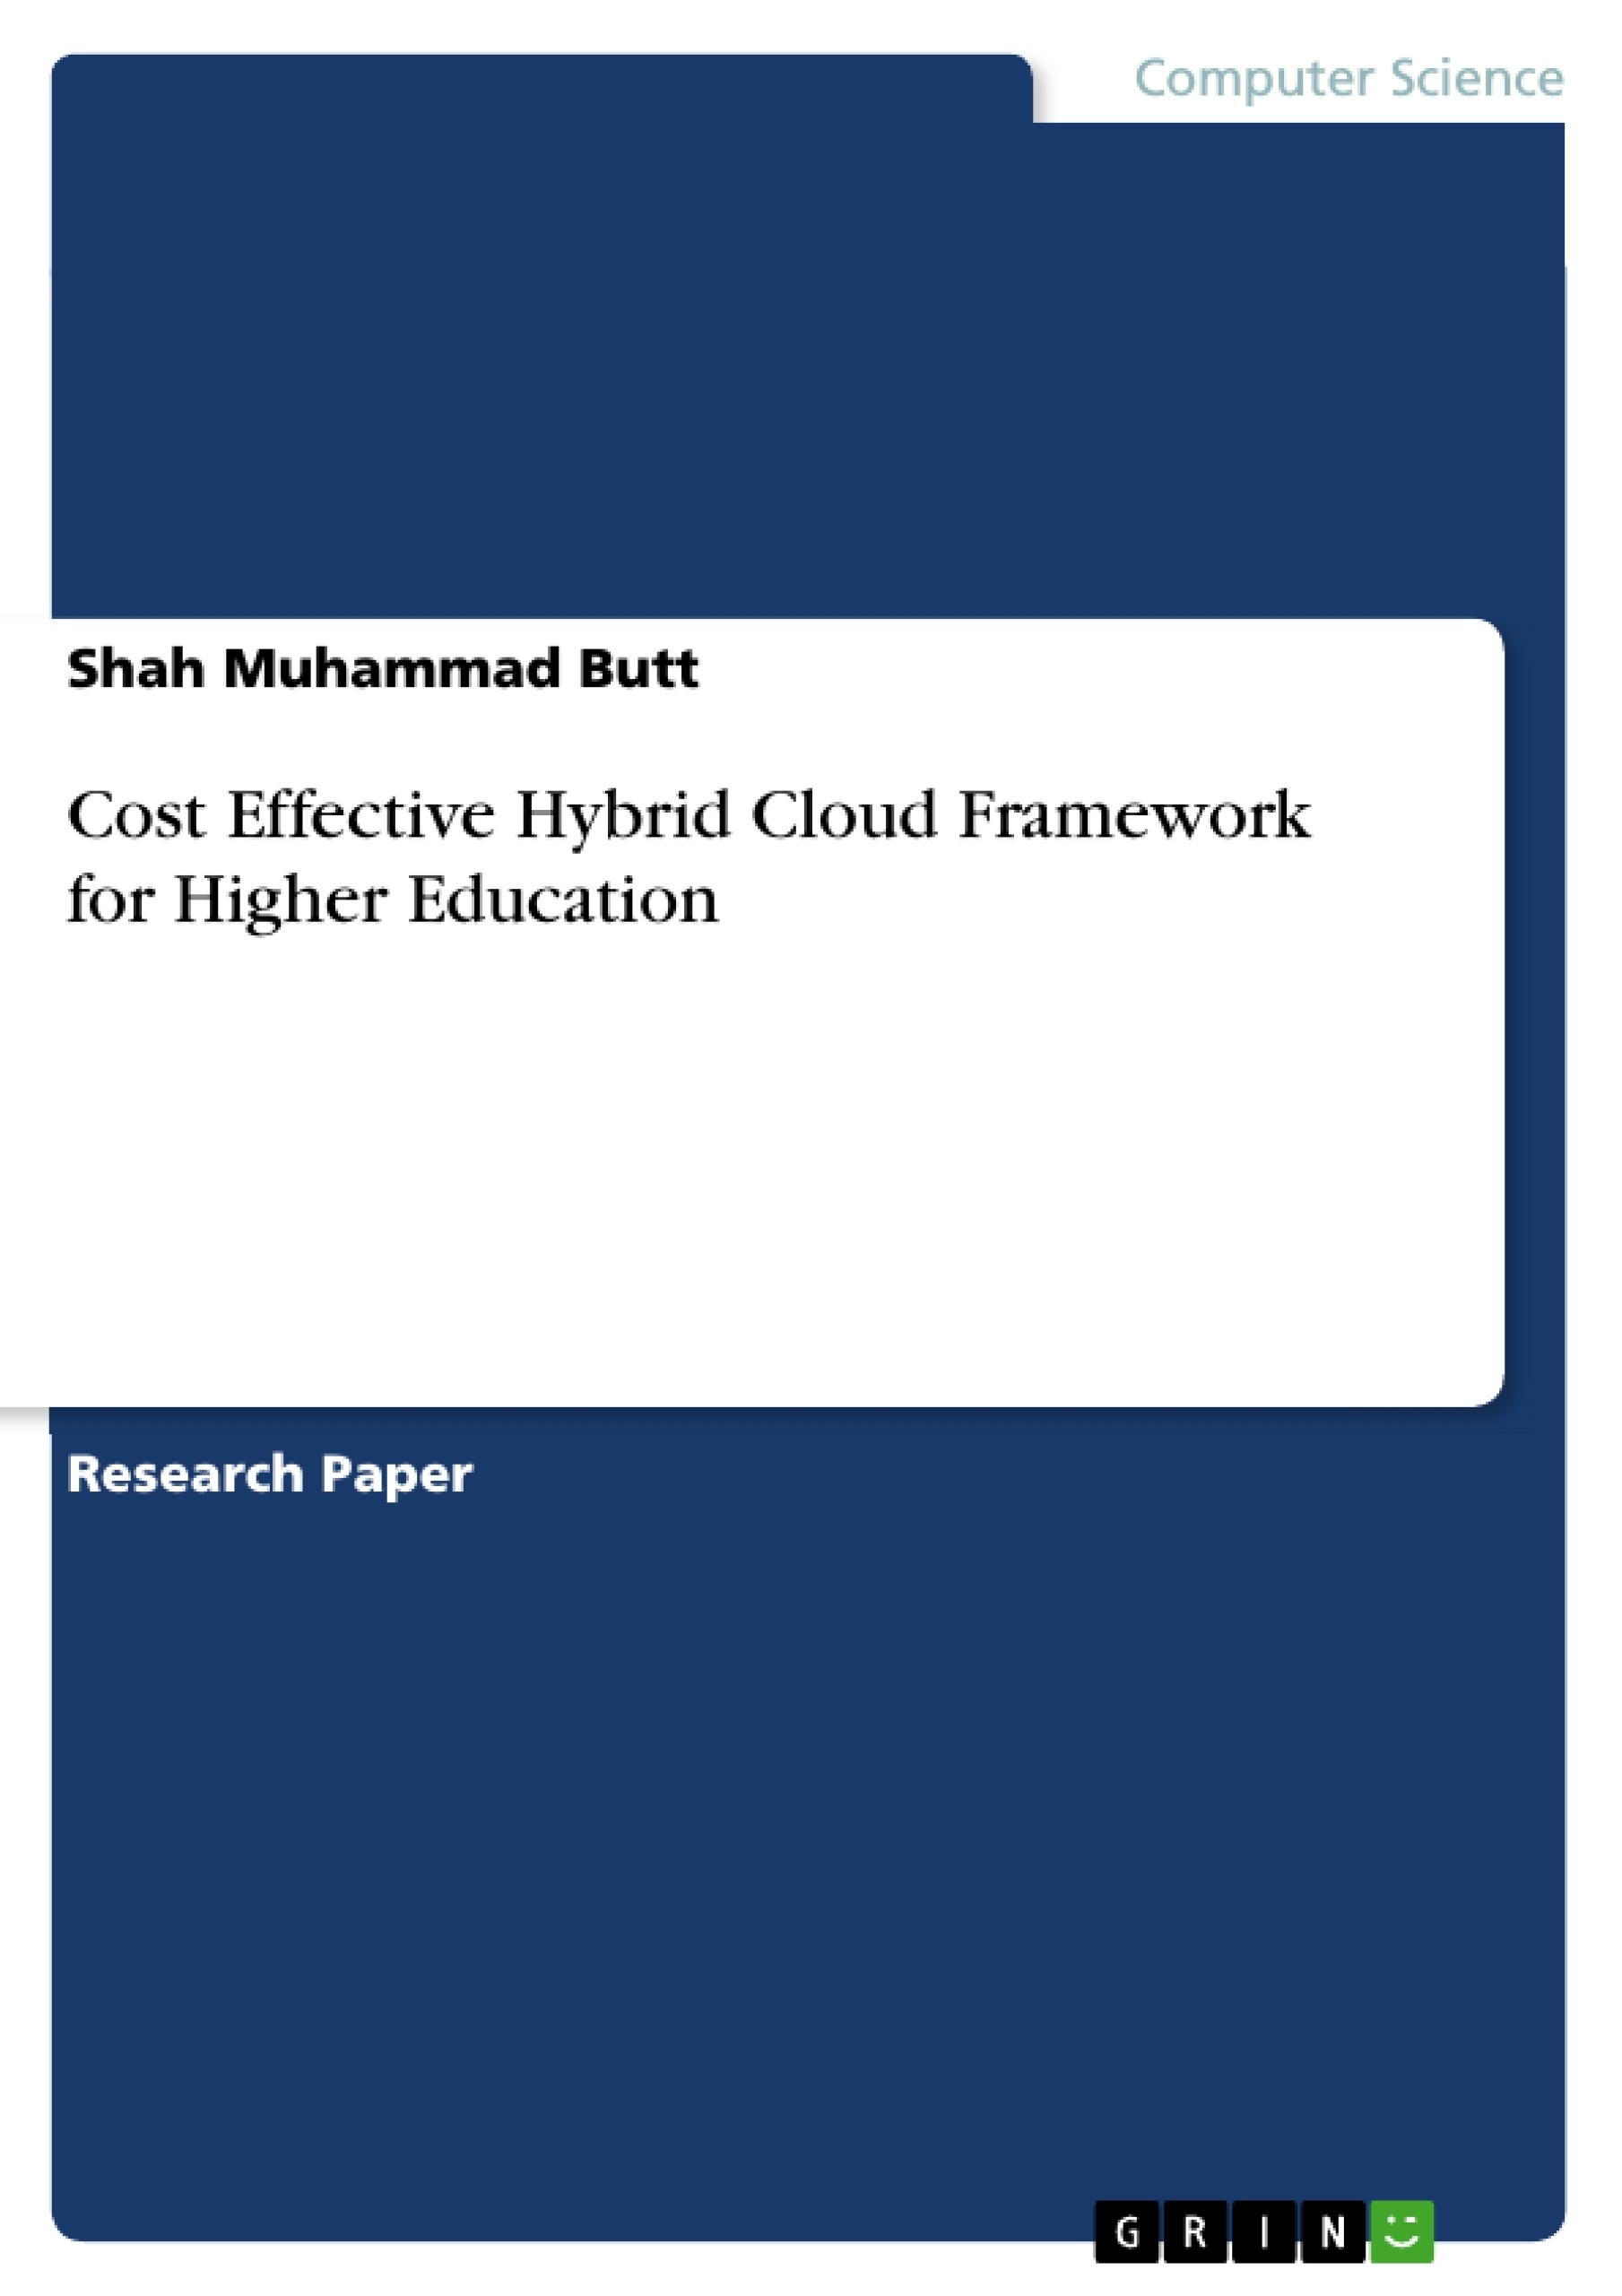 Title: Cost Effective Hybrid Cloud Framework for Higher Education